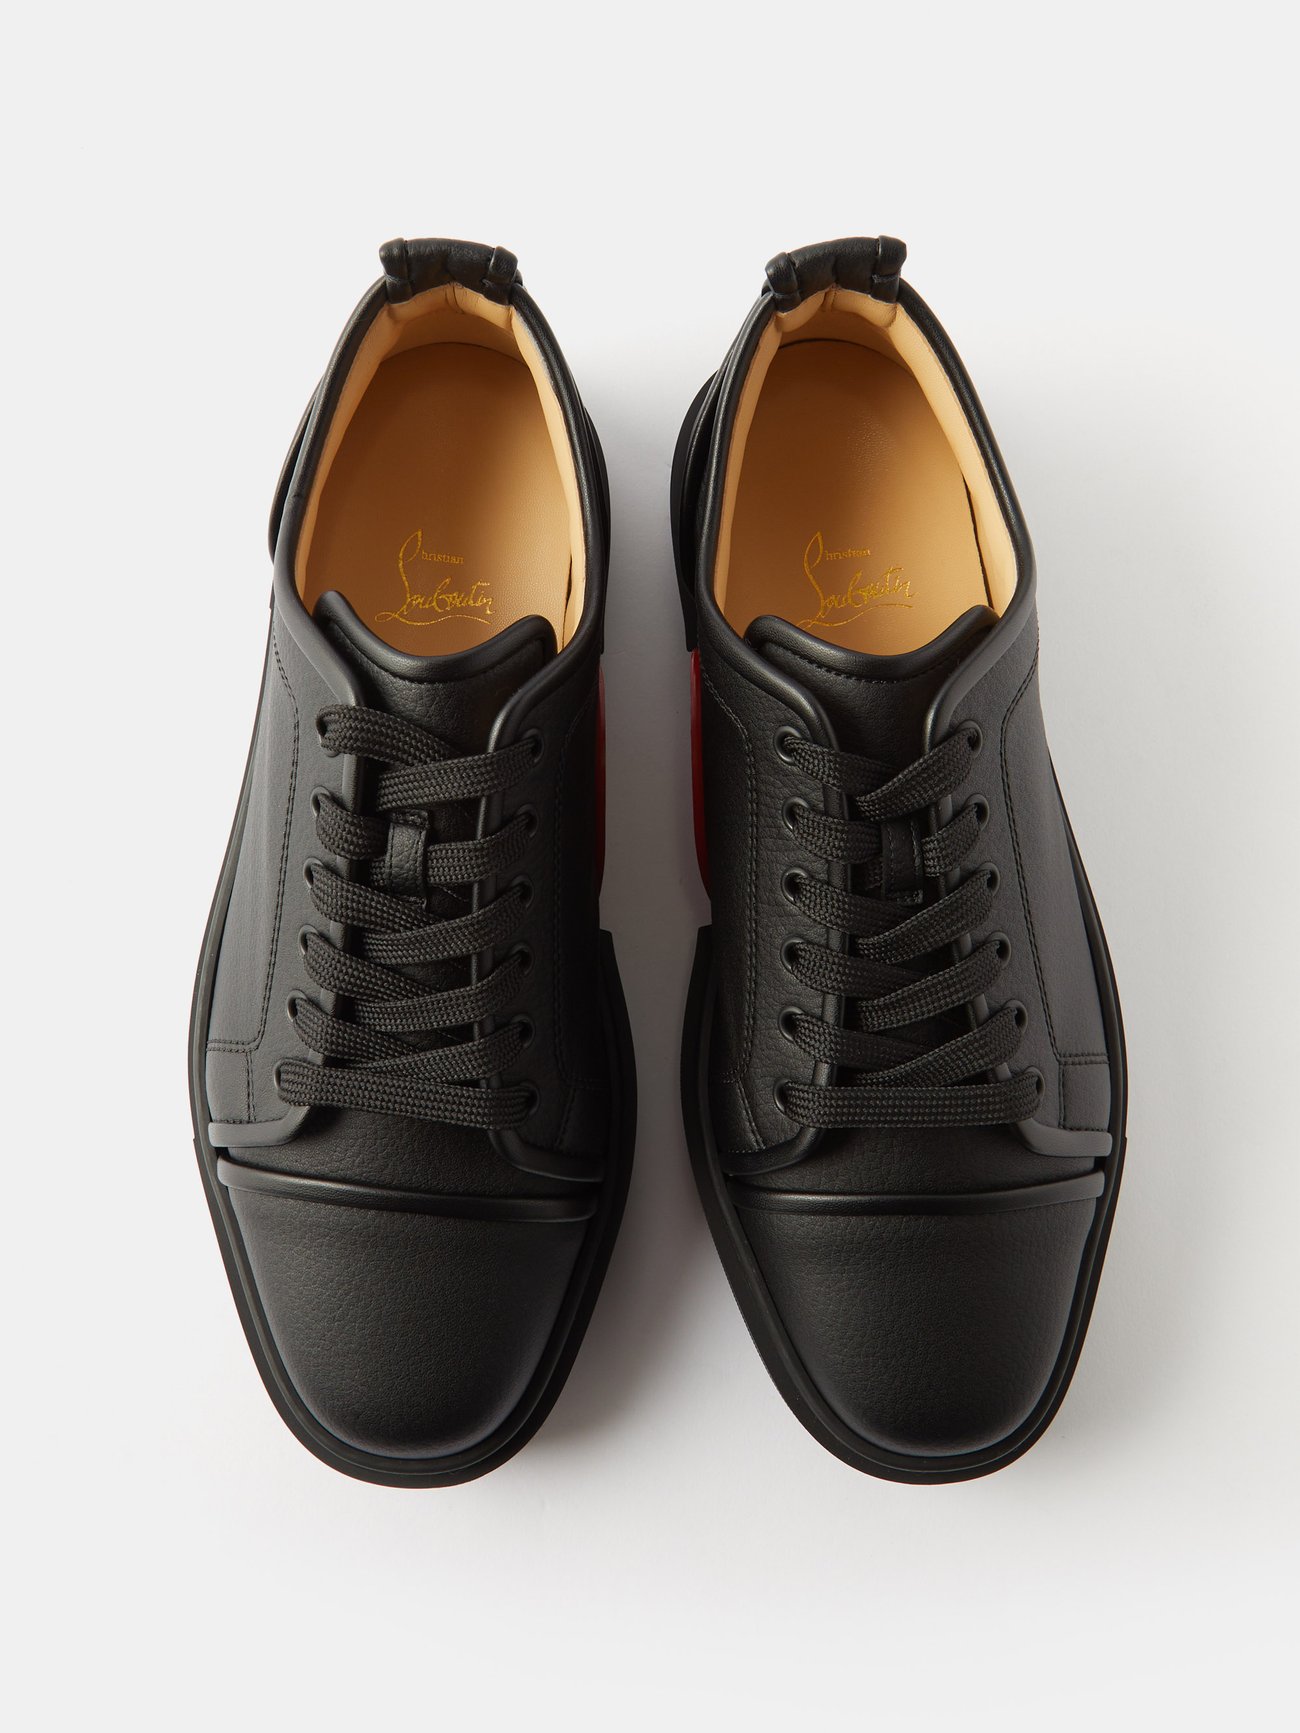 Christian Louboutin Adolon Black - Mens Shoes - Size 46